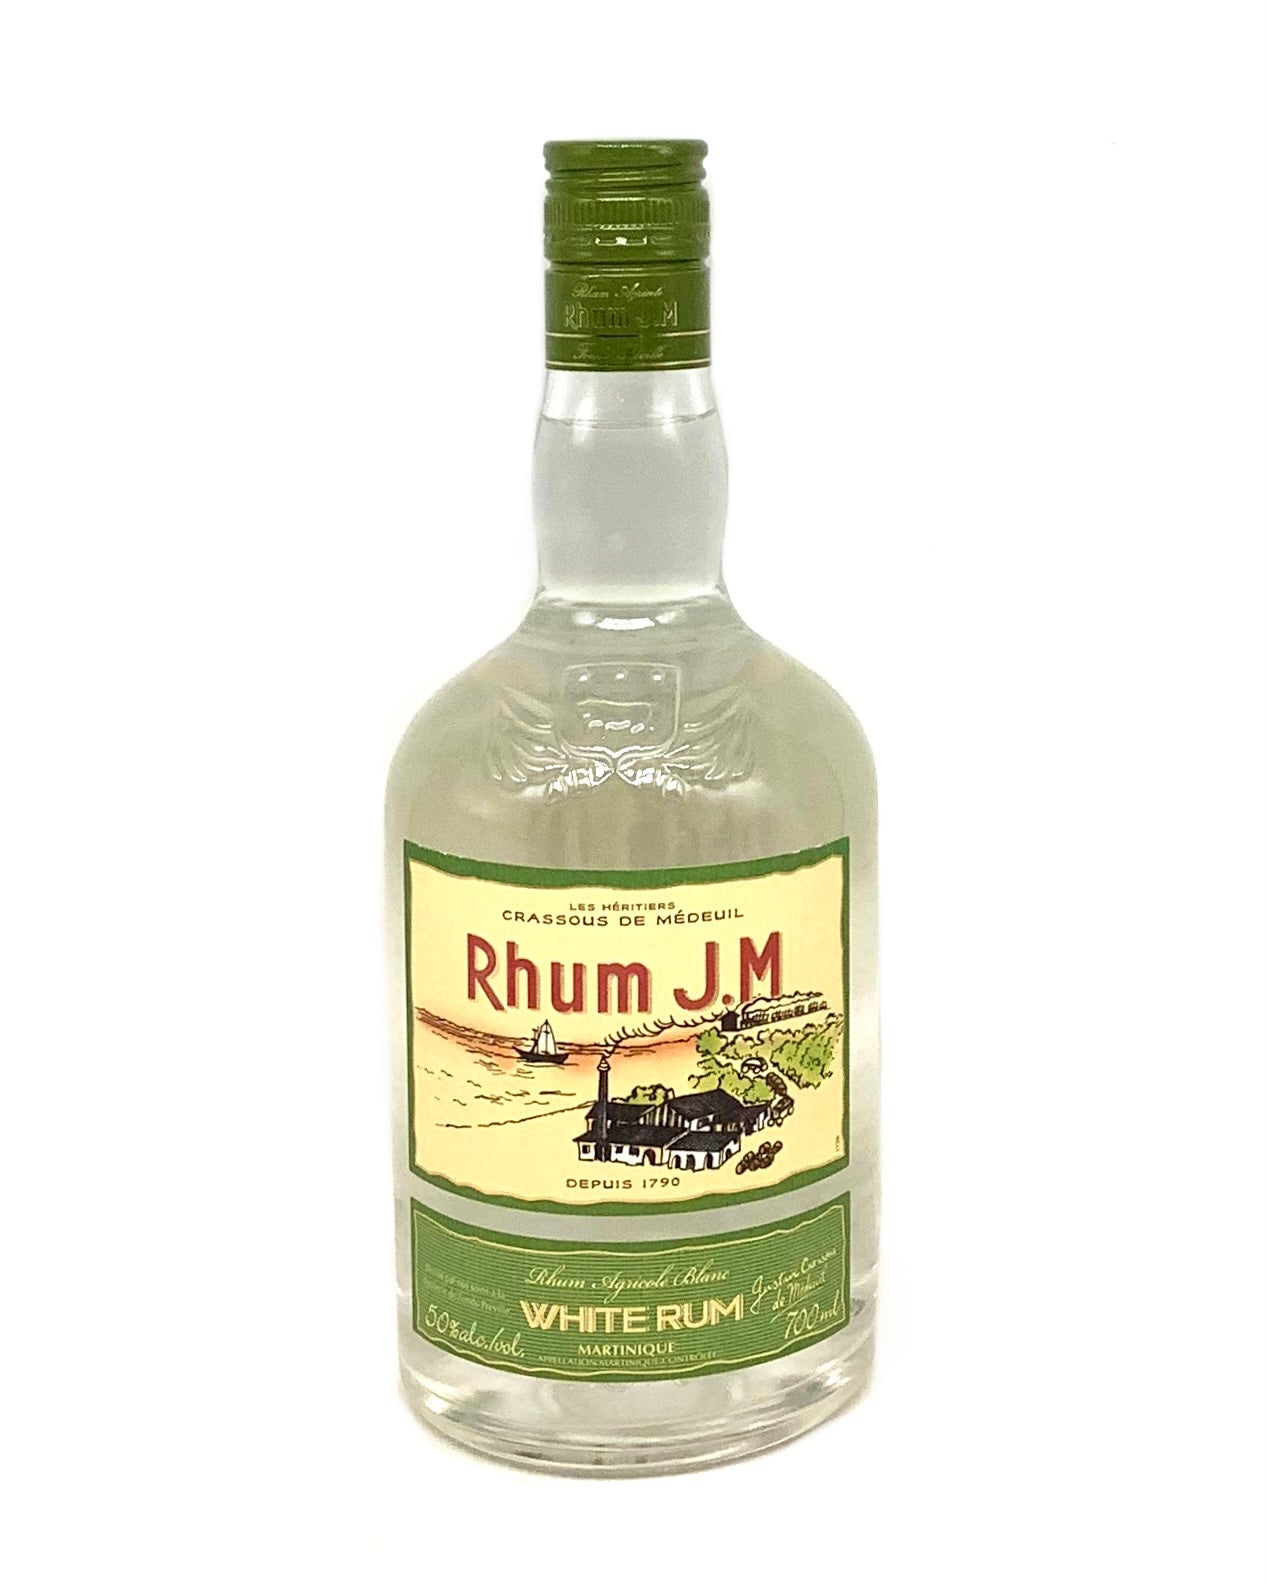 Rhum J.M White Rum Rhum Agricole Blanc 700ml